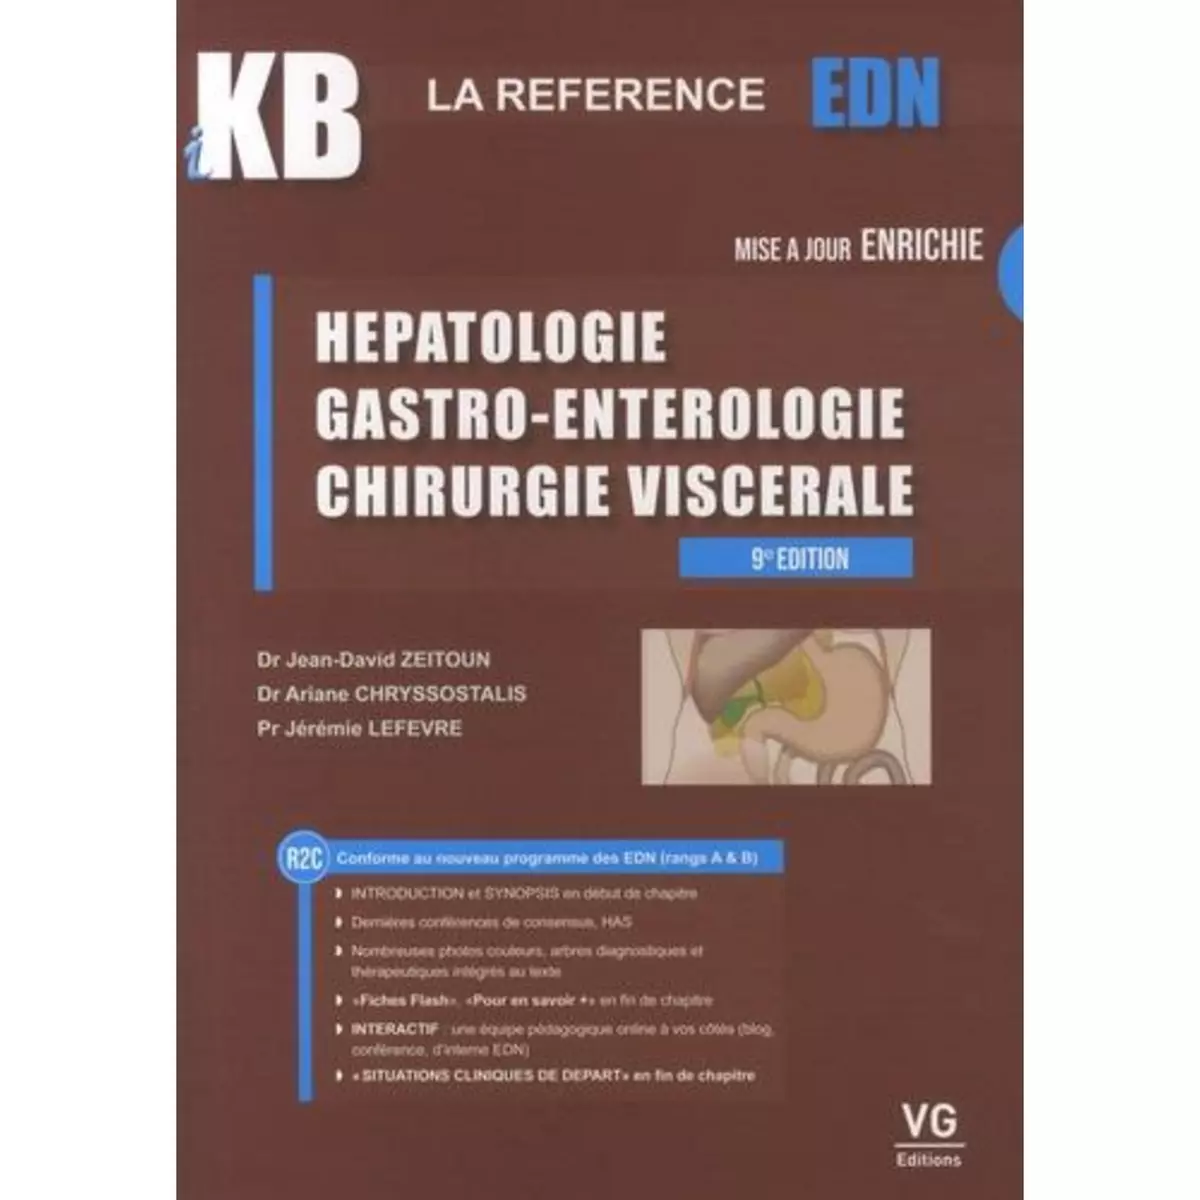  HEPATOLOGIE, GASTRO-ENTEROLOGIE, CHIRURGIE VISCERALE. 9E EDITION, Zeitoun Jean-David